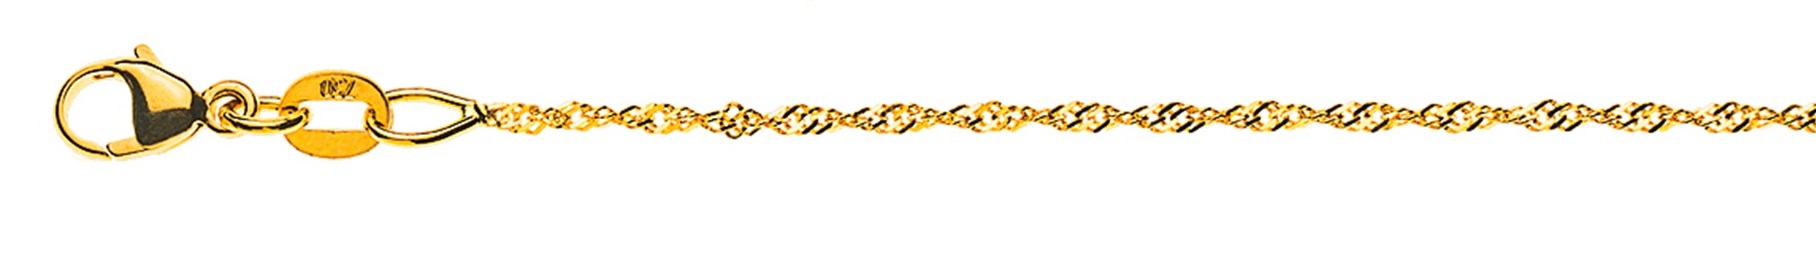 AURONOS Style Necklace Yellow Gold 9K Singapore Chain 55cm 1.2mm